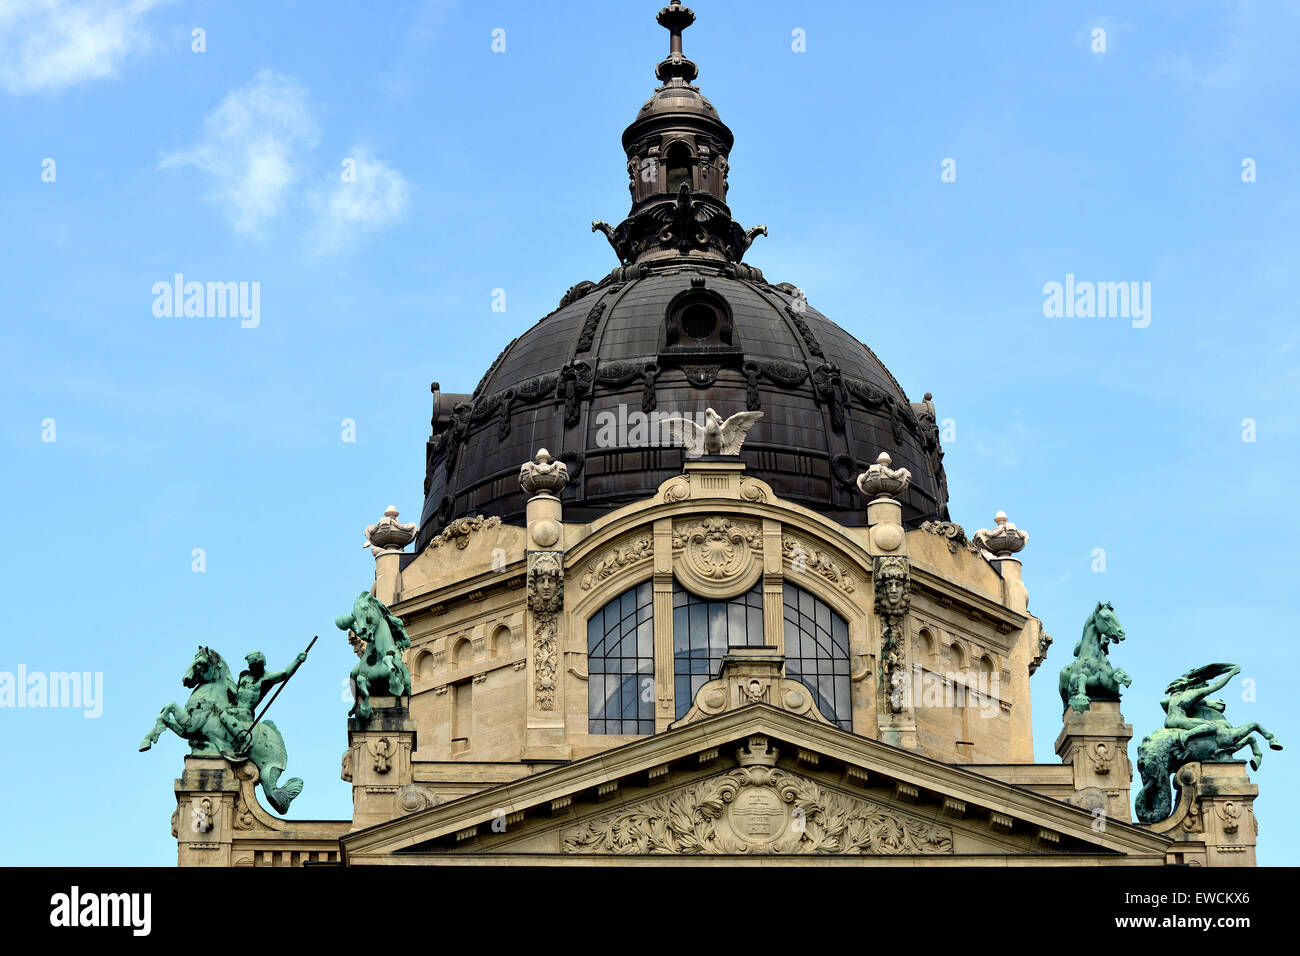 details of Dome of Szecheneyi Baths Budapest Hungary Stock Photo